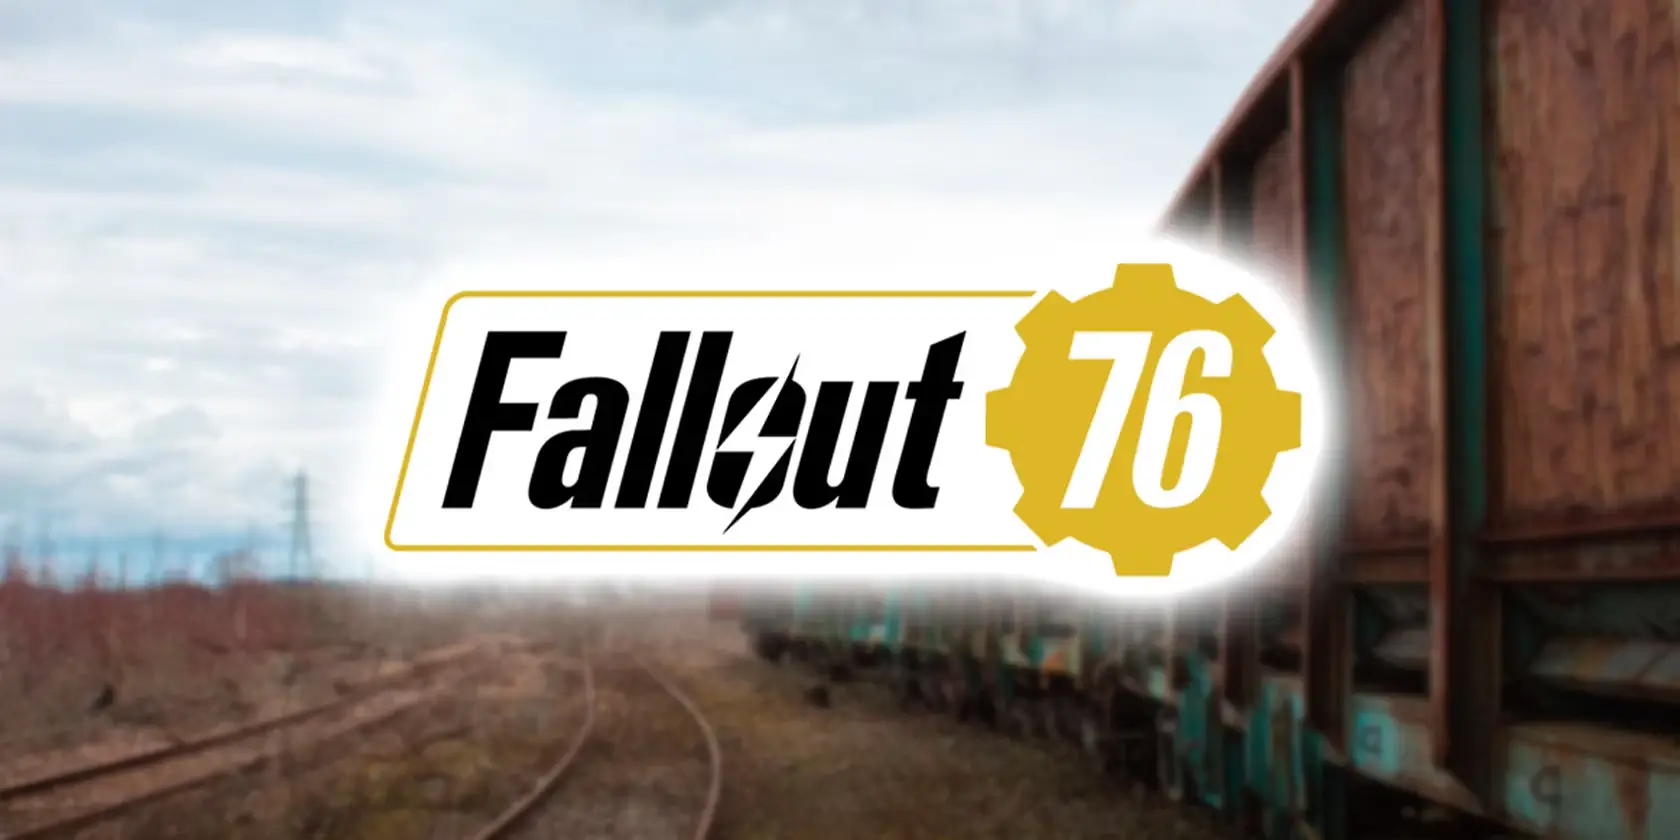 Fallout 76 — MMO бьет рекорды популярности!